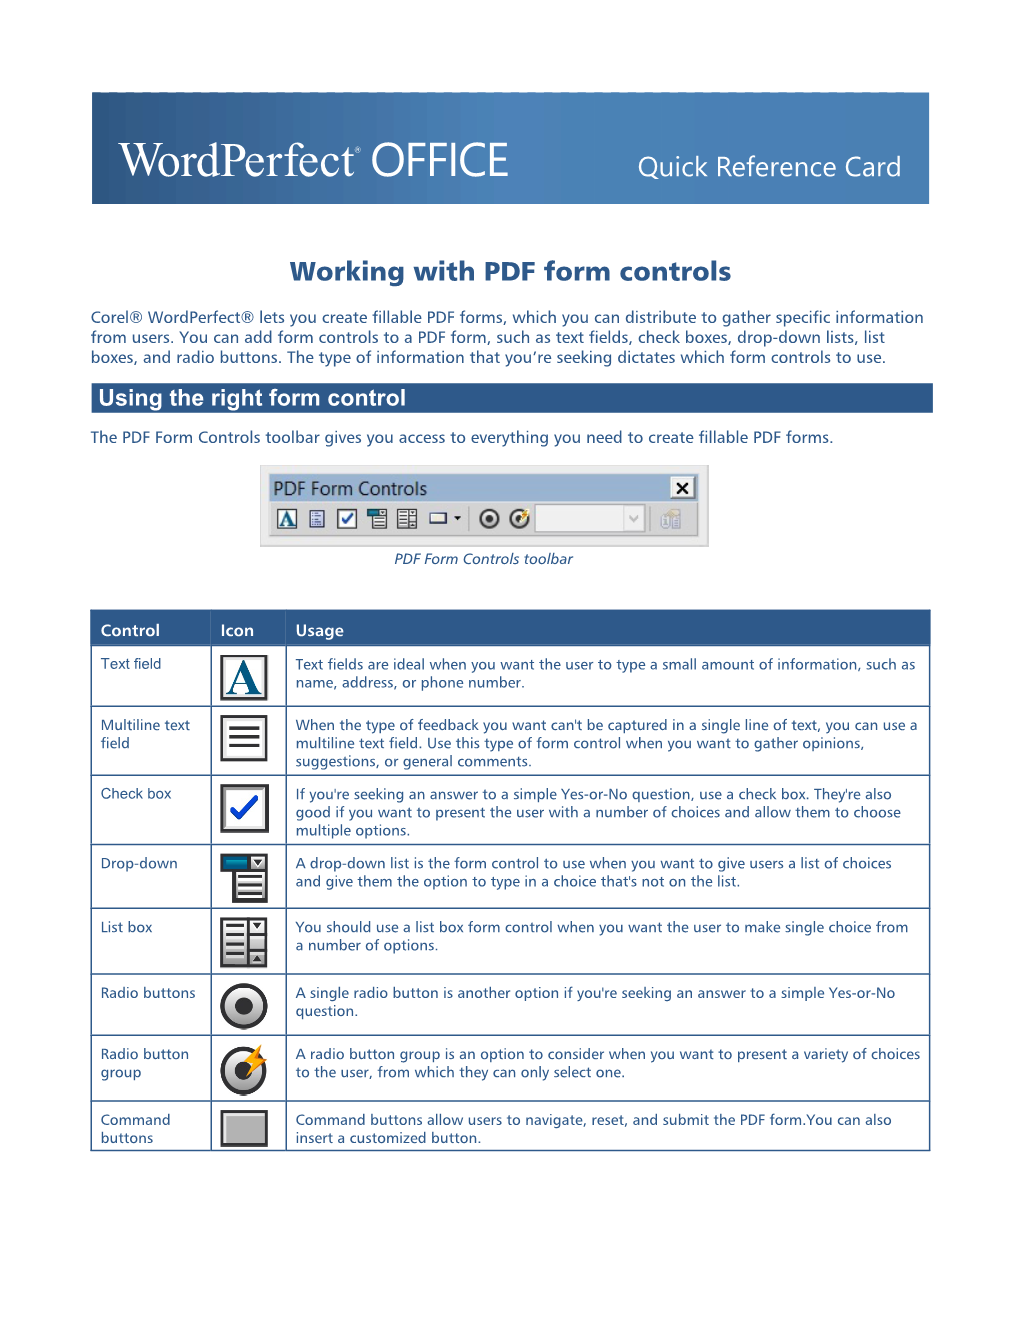 Corel(R) Wordperfect(R): Working with PDF Form Controls